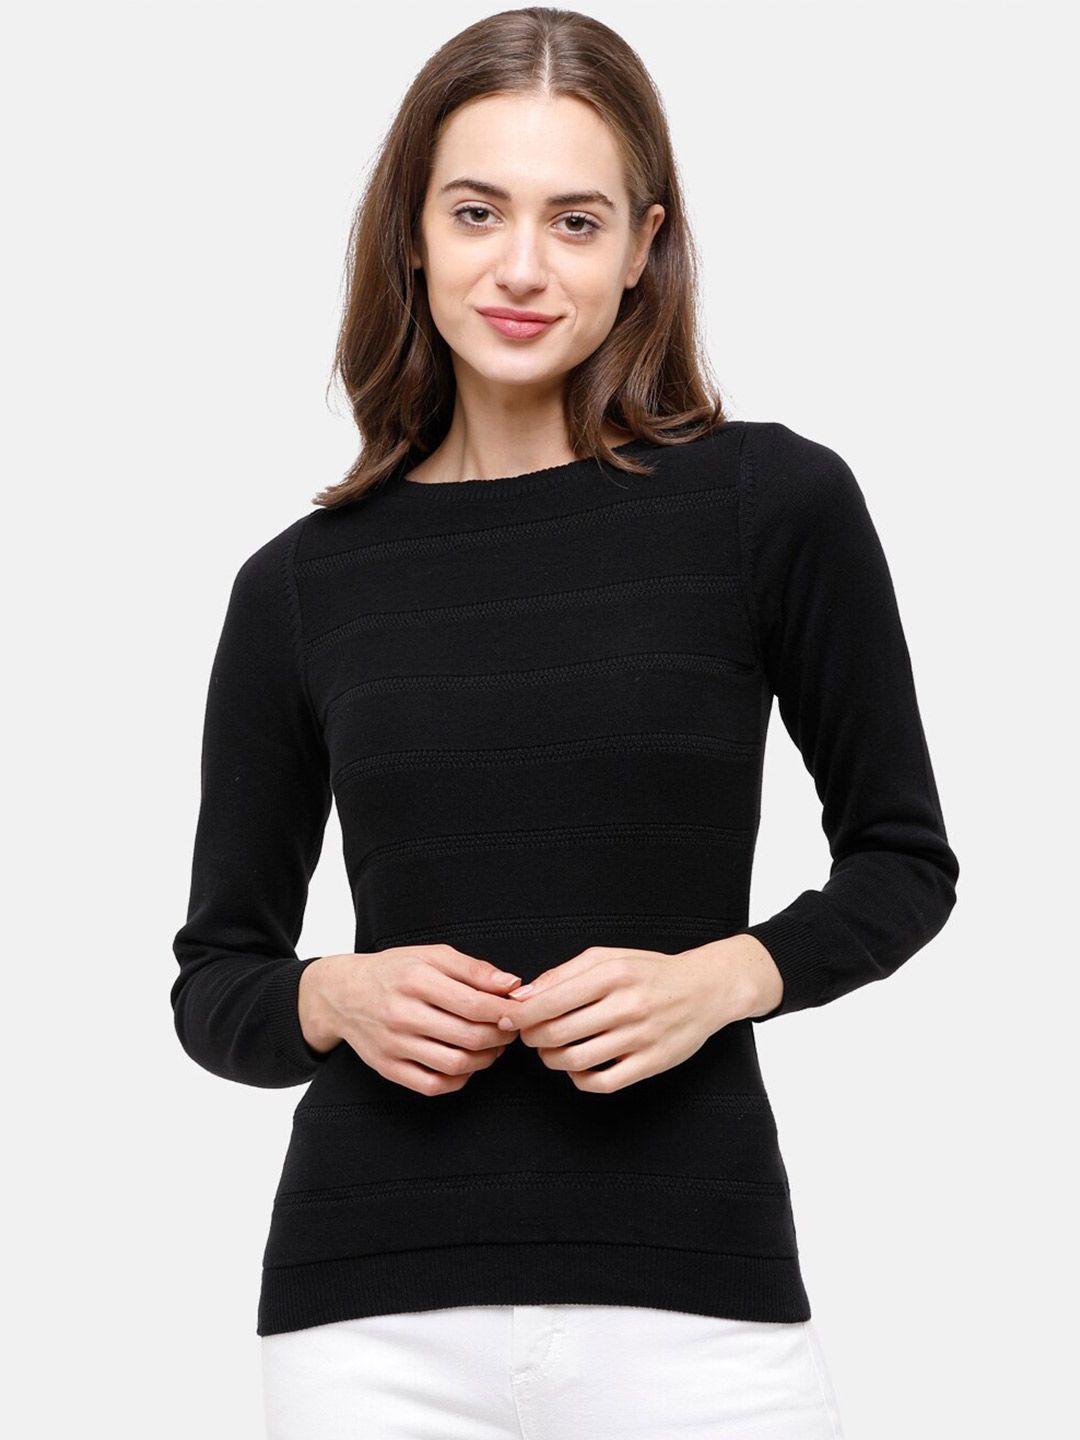 98 Degree North Women Black Striped Pullover Sweater Price in India